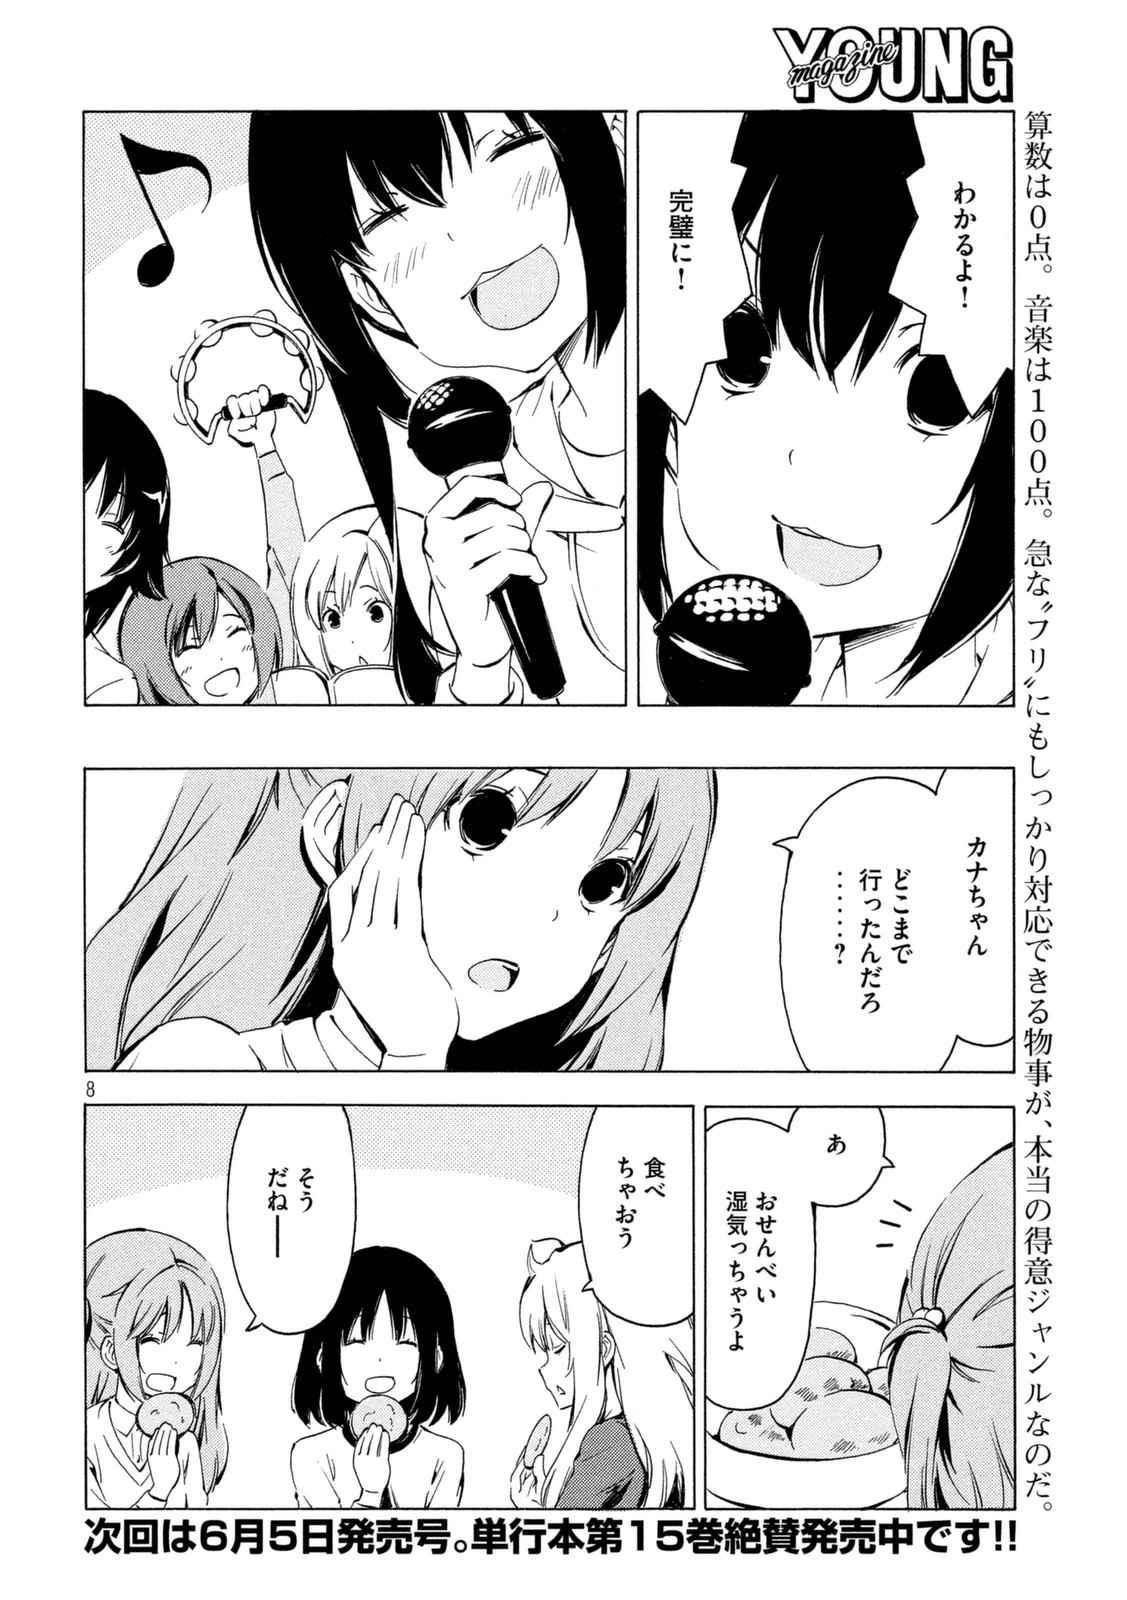 Minami-ke - Chapter 317 - Page 8